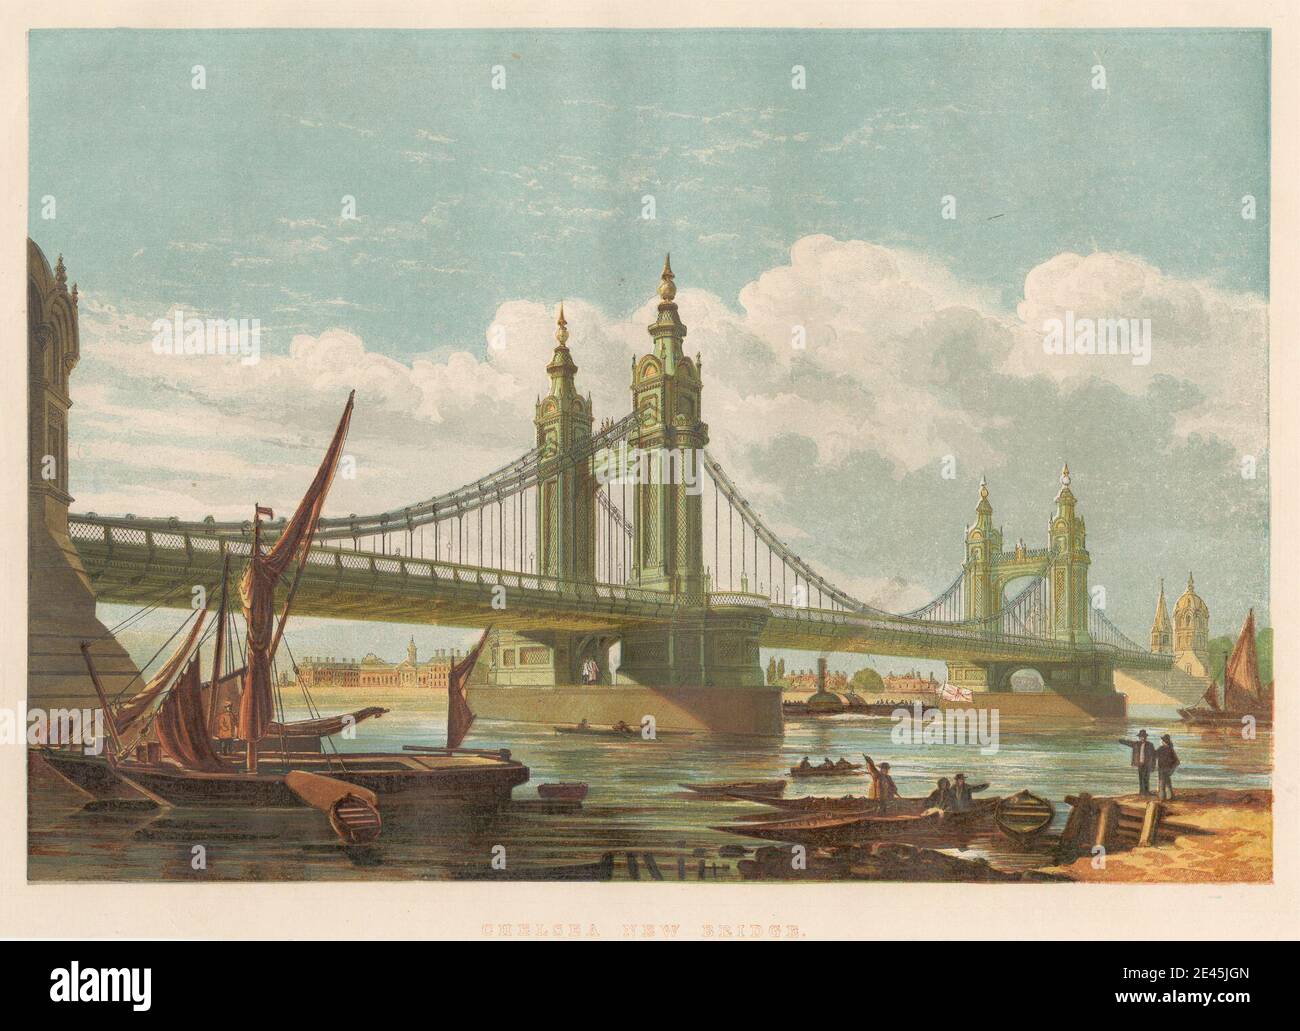 Print made by Leighton Brothers, active 1858â€“1885, Chelsea New Bridge, 1858. Chromoxylograph on medium, slightly textured, cream wove paper. Stock Photo